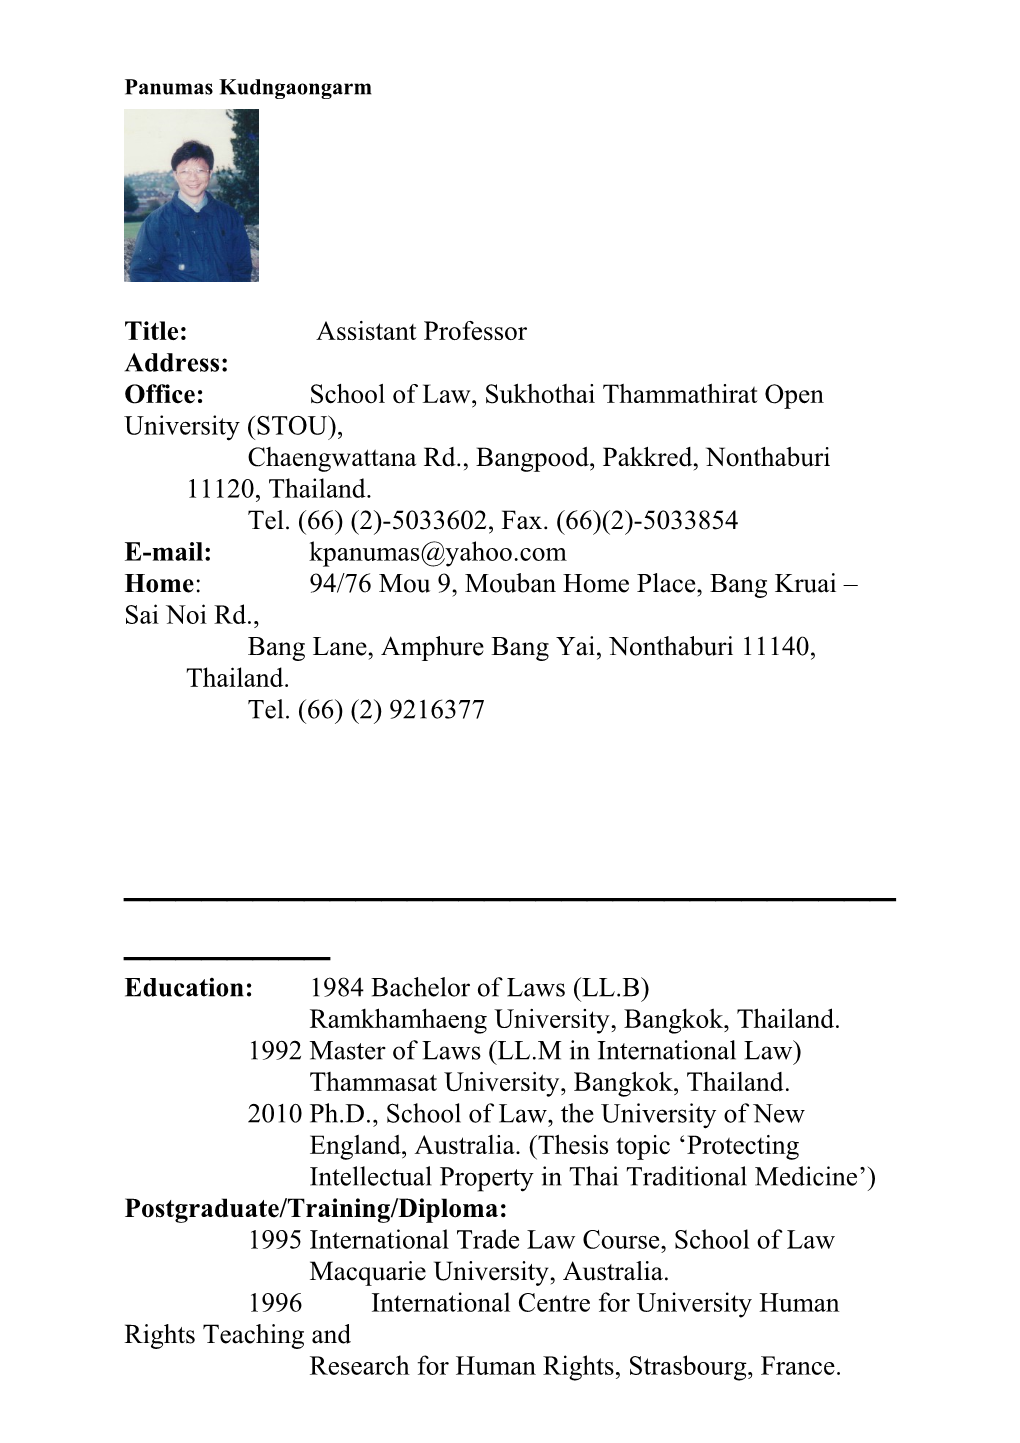 Office:School of Law, Sukhothai Thammathirat Open University (STOU)